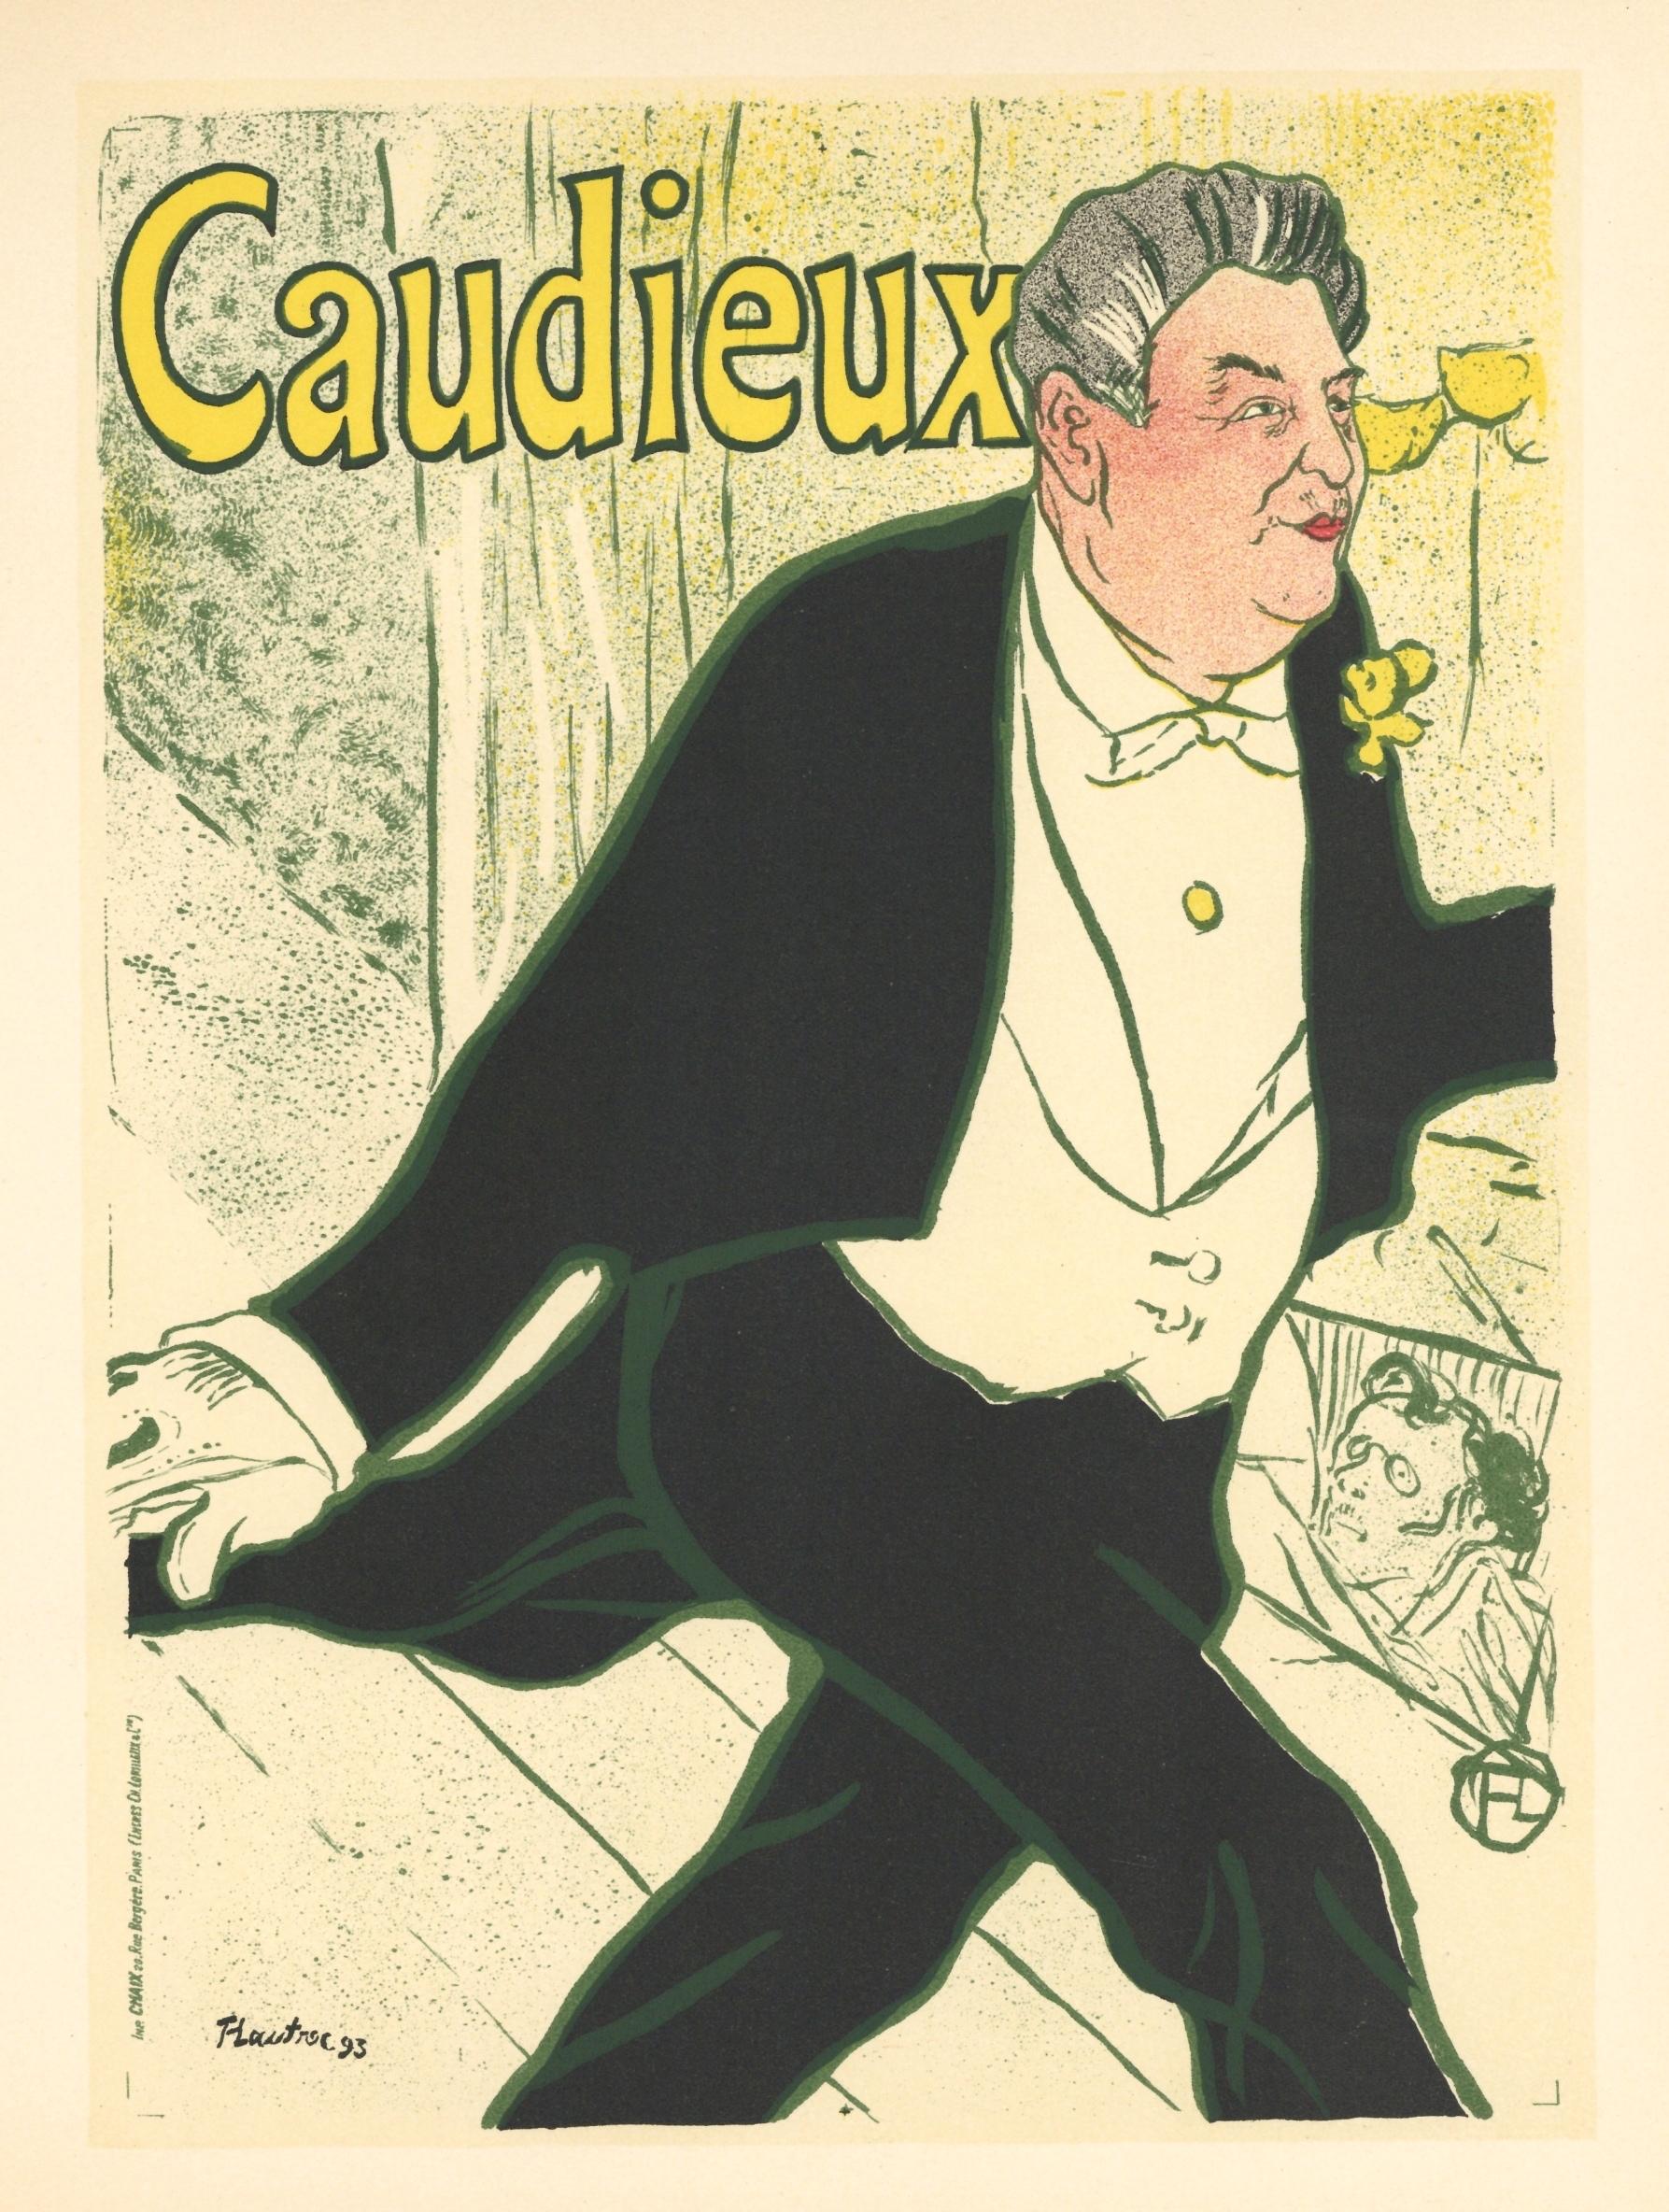 "Caudieux" lithograph poster - Print by (After) Henri Toulouse Lautrec